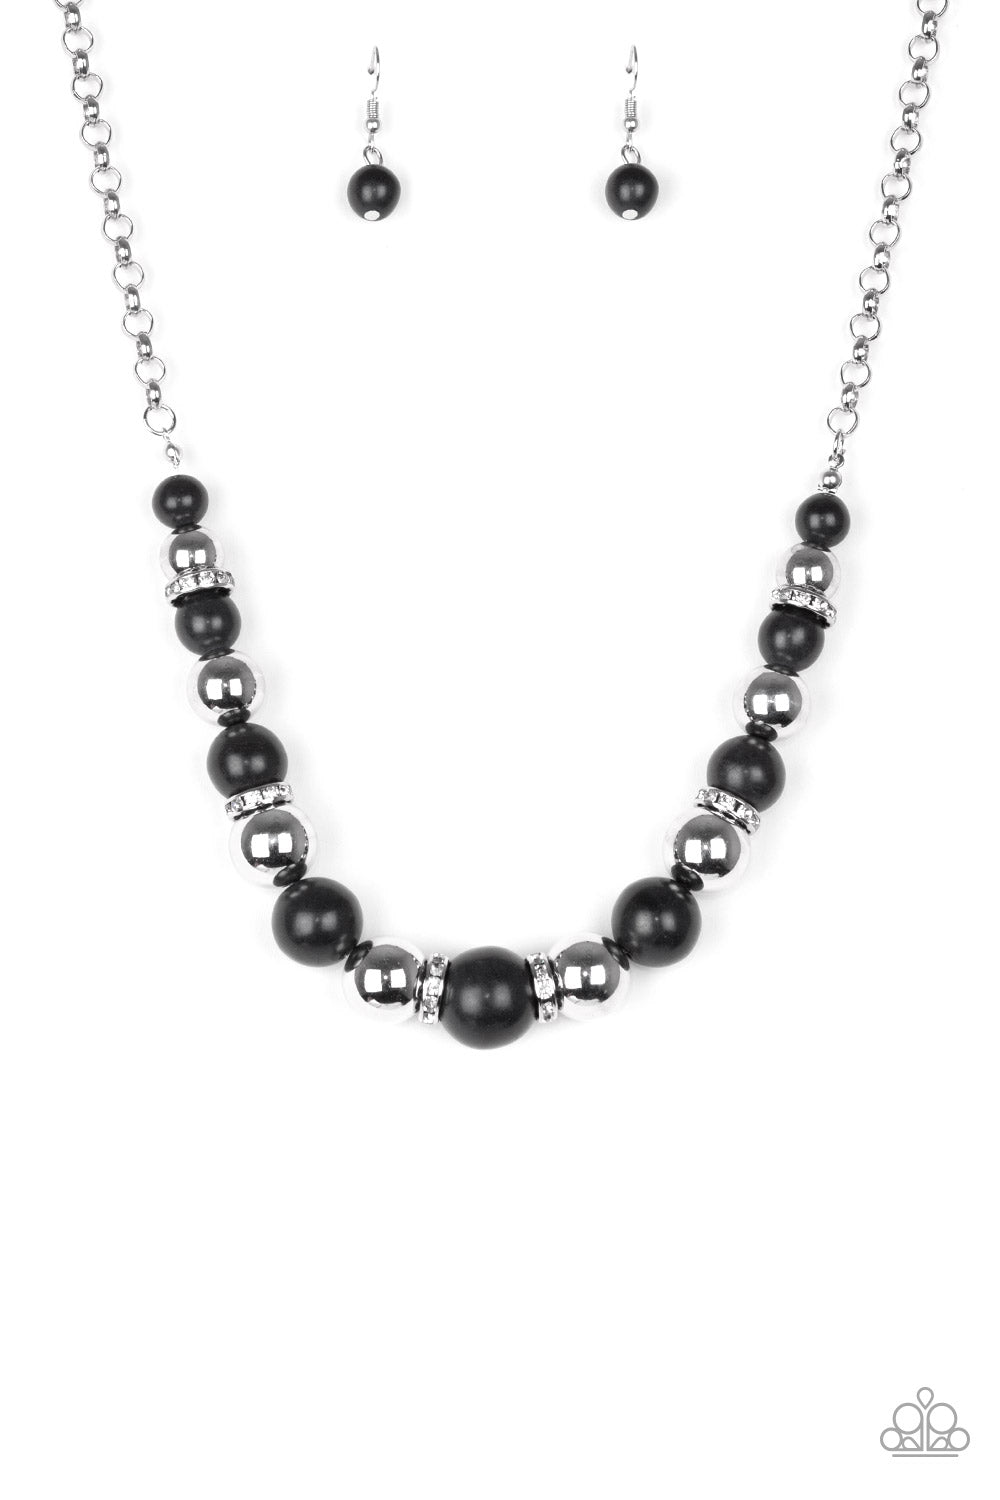 The Ruling Class - Black Stone Necklace Set & Bracelet Combo - Princess Glam Shop